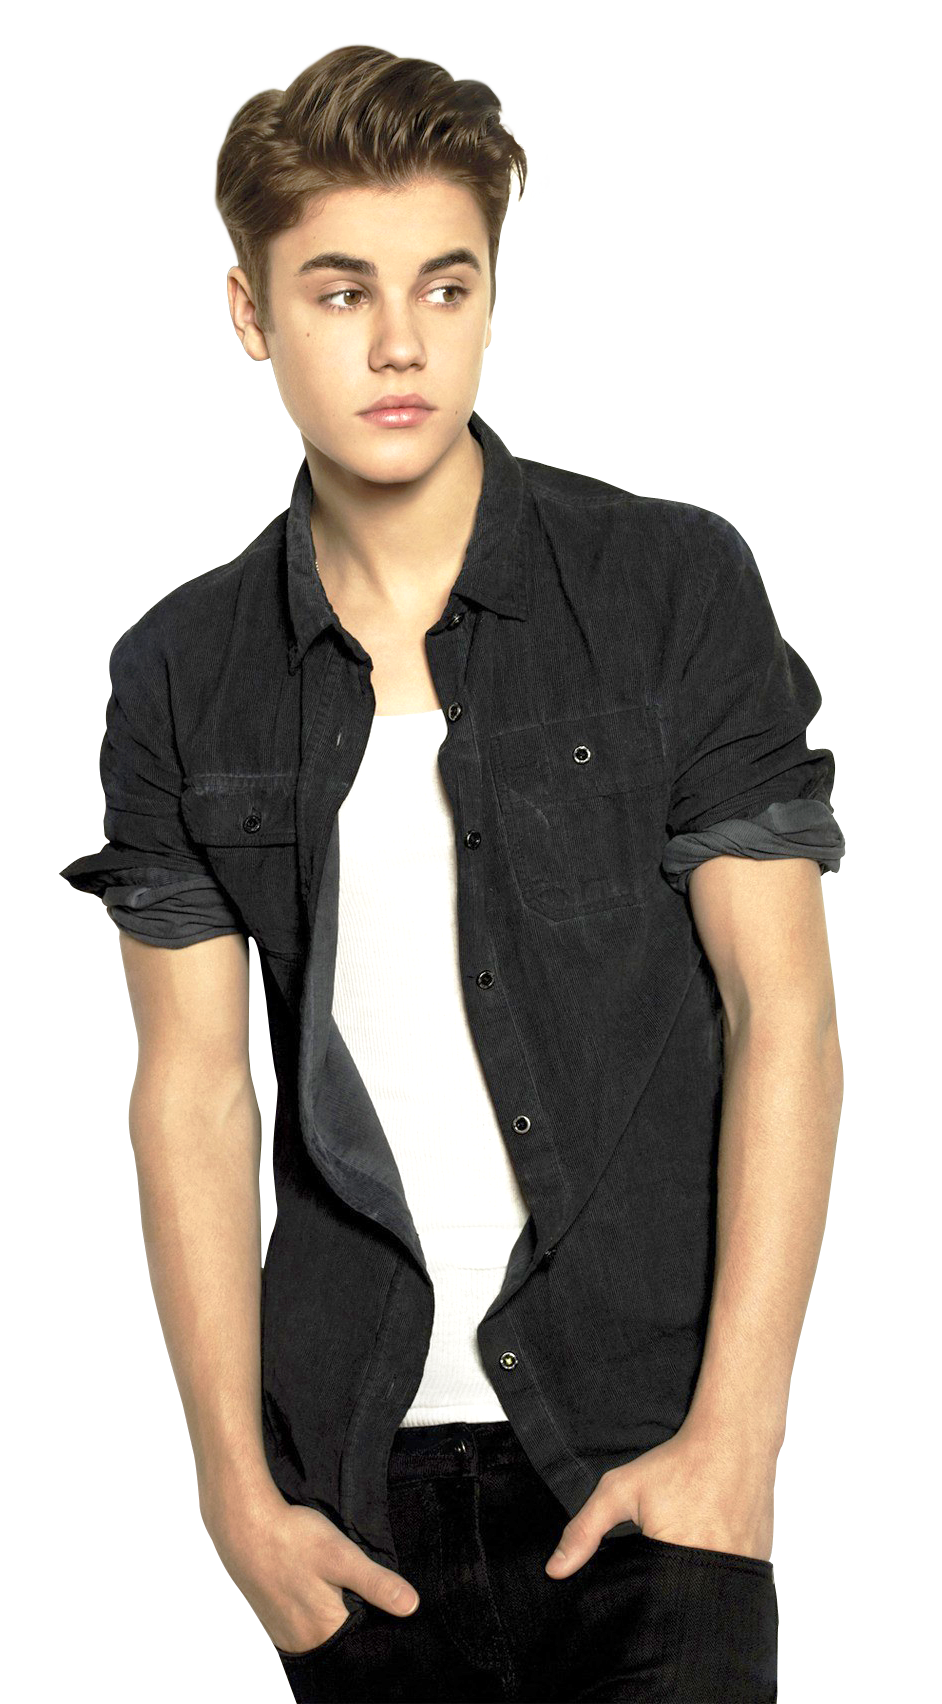 Justin Bieber Photos Download Zedge - justinbieberjullld